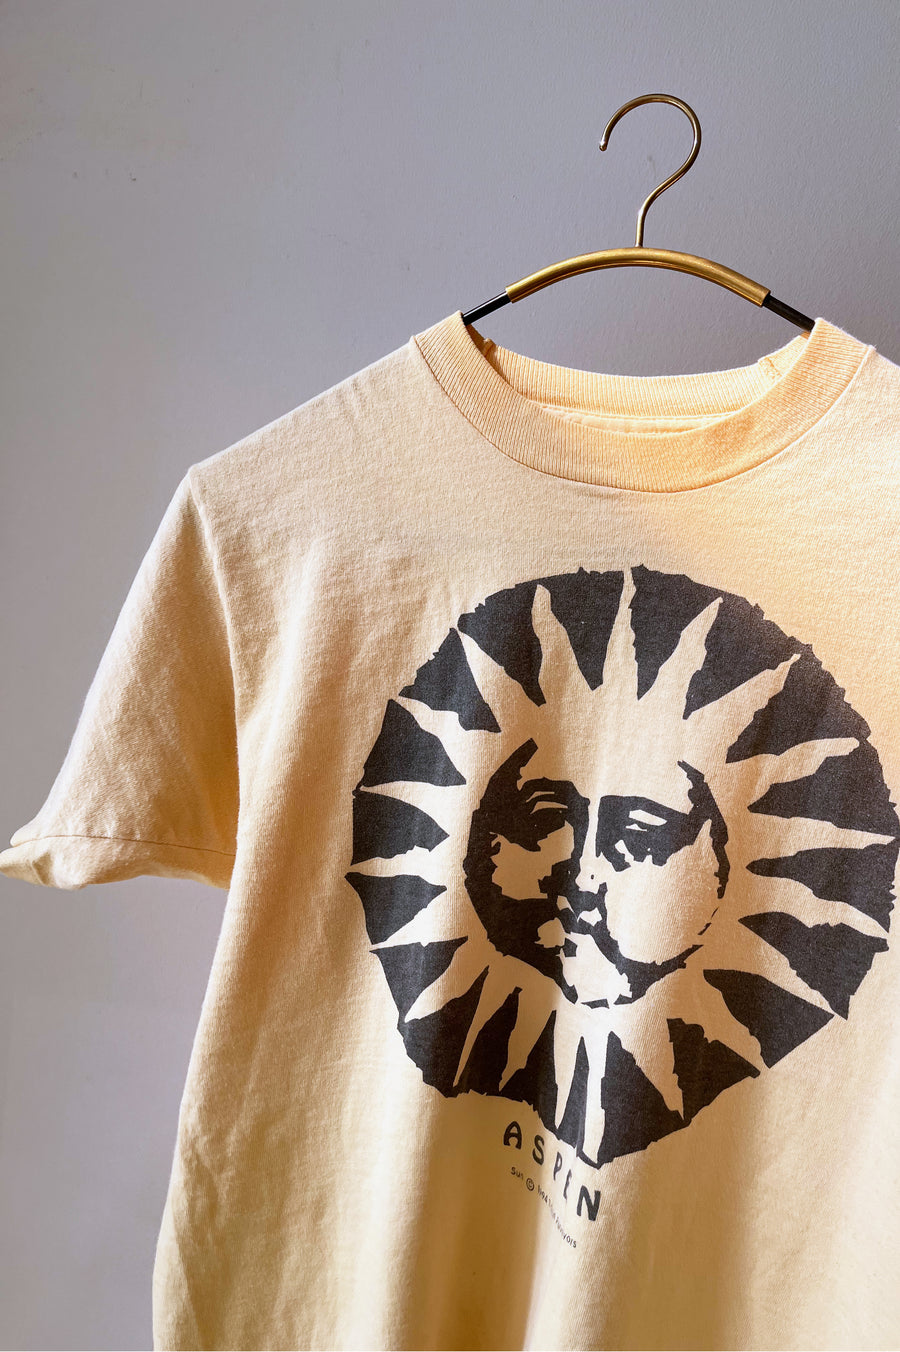 Aspen Sun Vintage T-Shirt